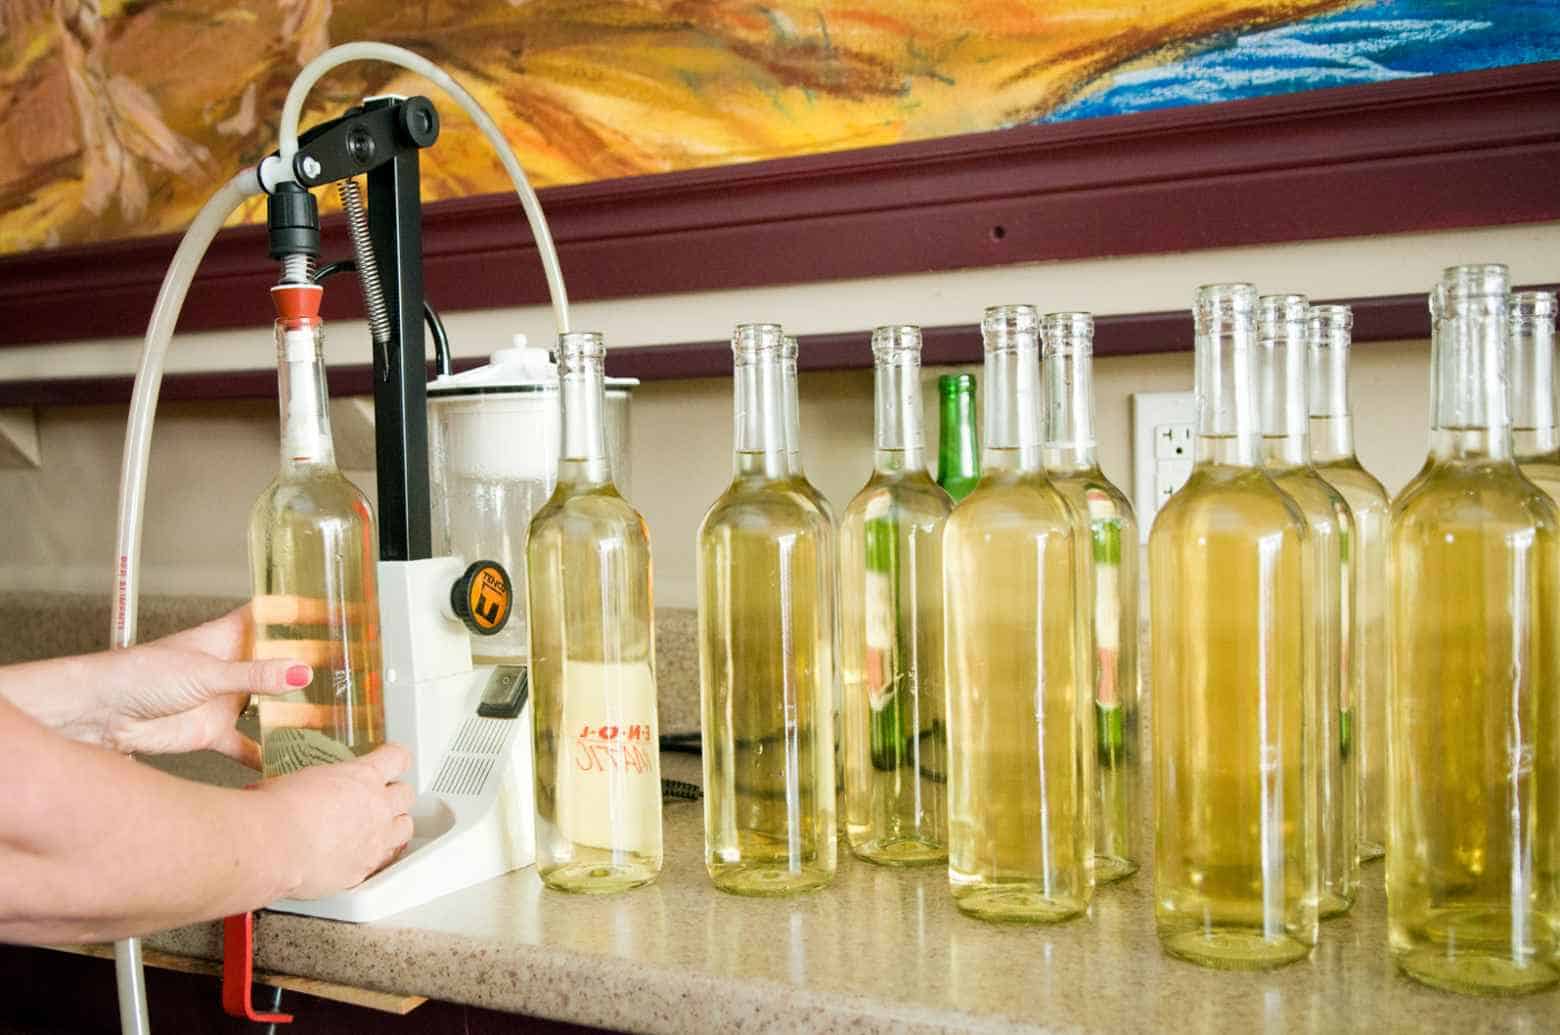 Clarifying the Wine